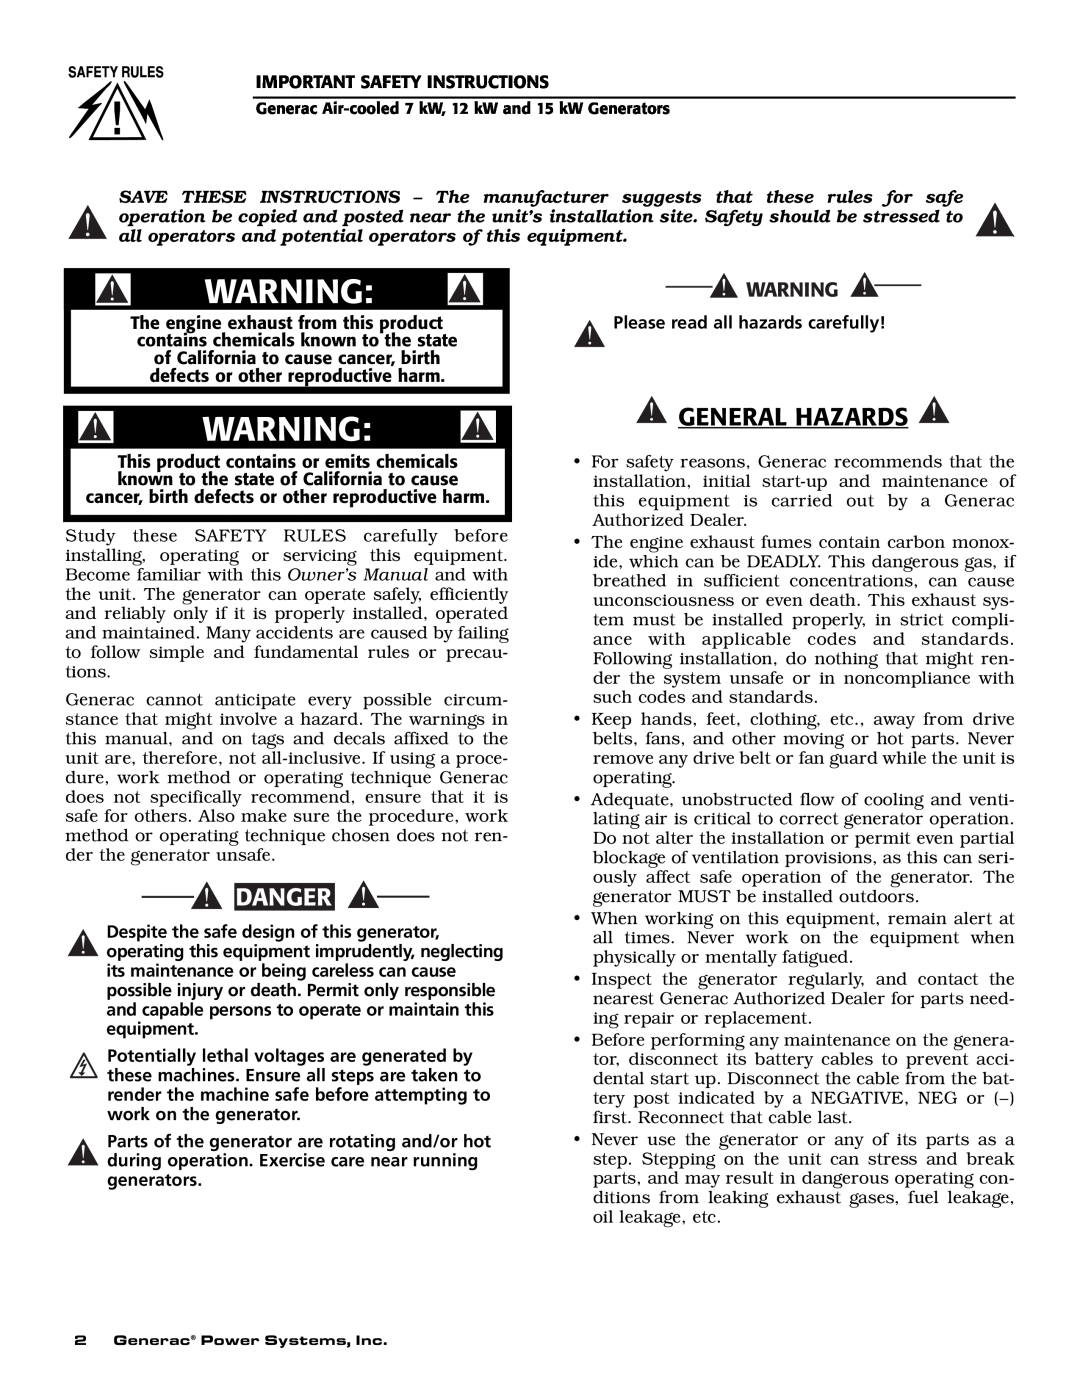 Generac 04675-3 General Hazards, Danger, Please read all hazards carefully, Despite the safe design of this generator 